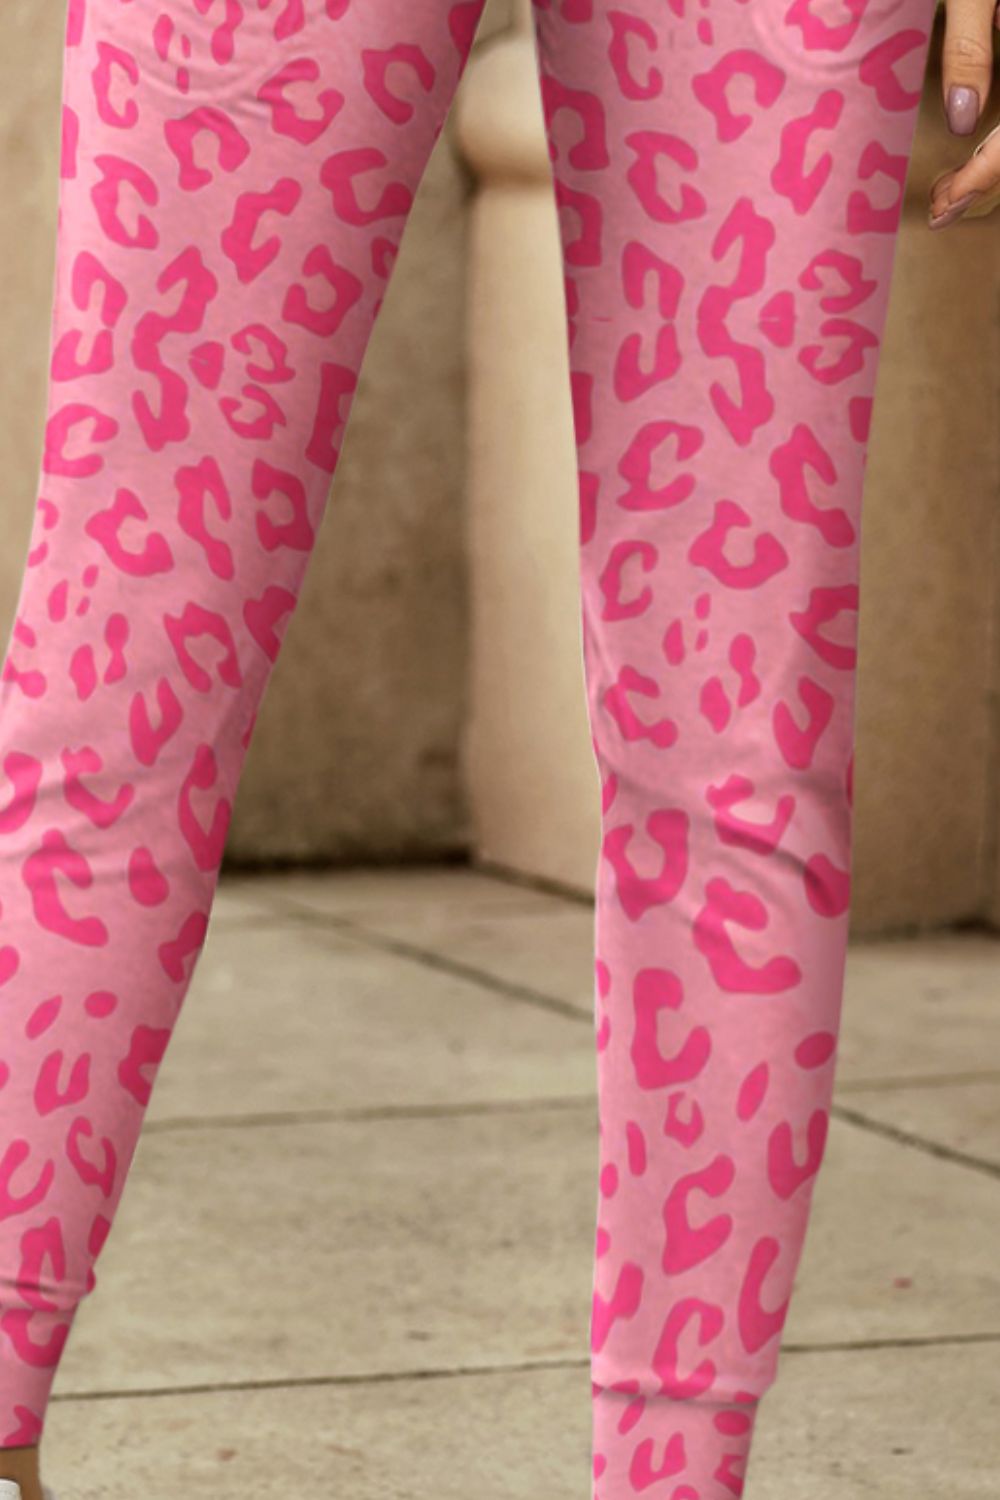 Victoria's Secret PINK Leggings for sale in Wichita, Kansas